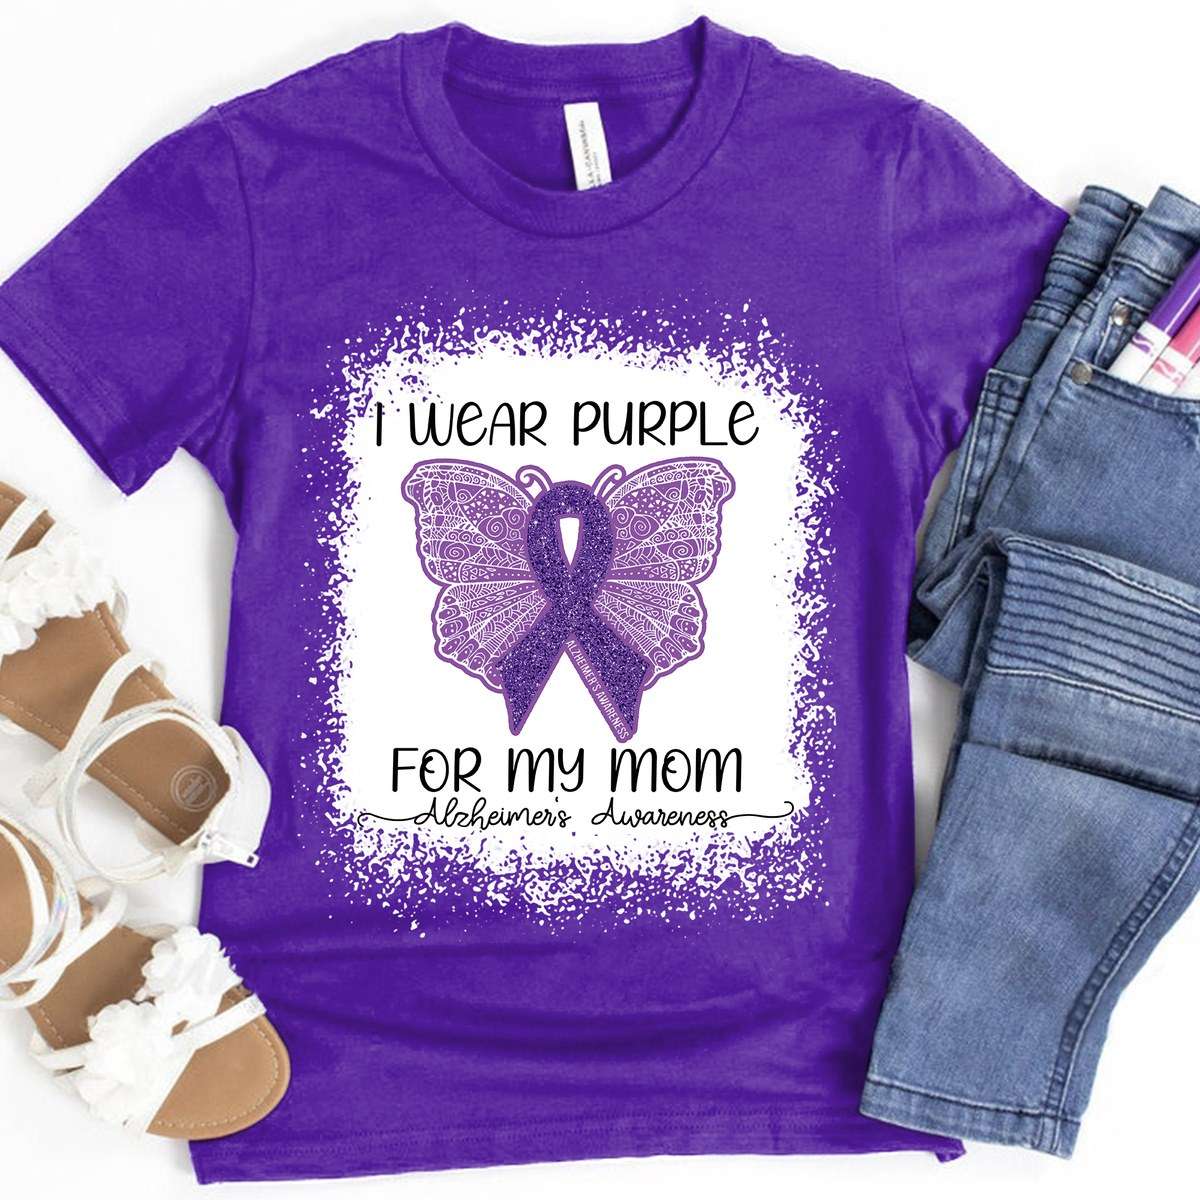 I wear purple for my mom - Alzheimer's awareness, mother with alzheimer